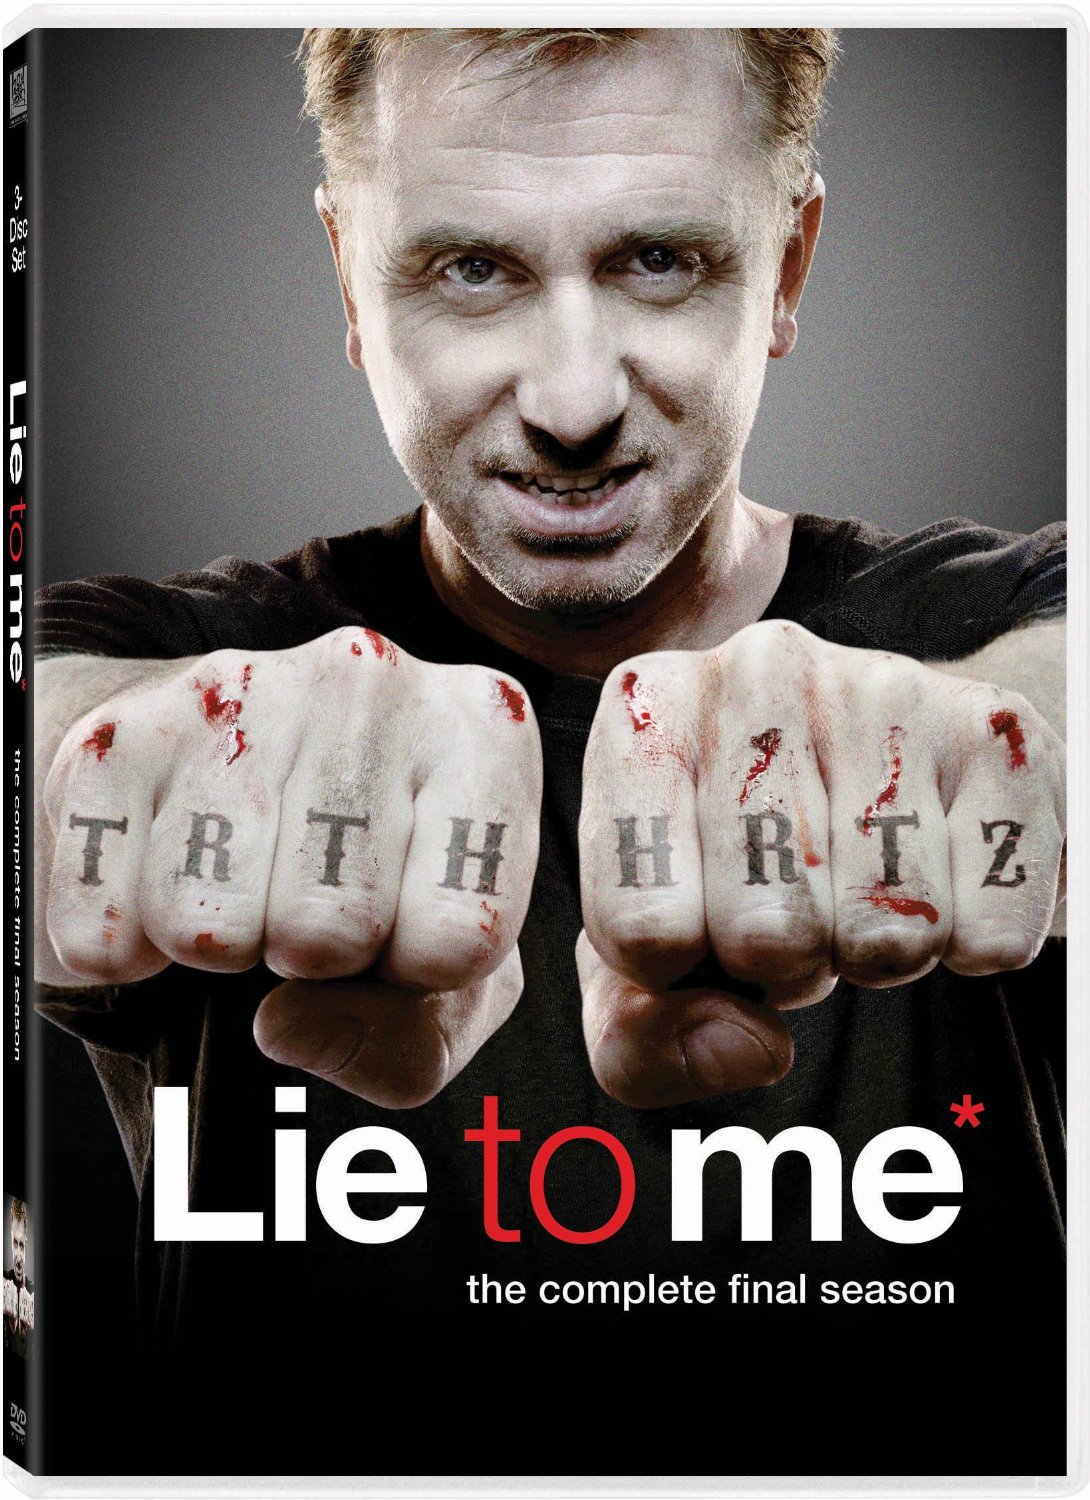 Lie to Me: Season 3